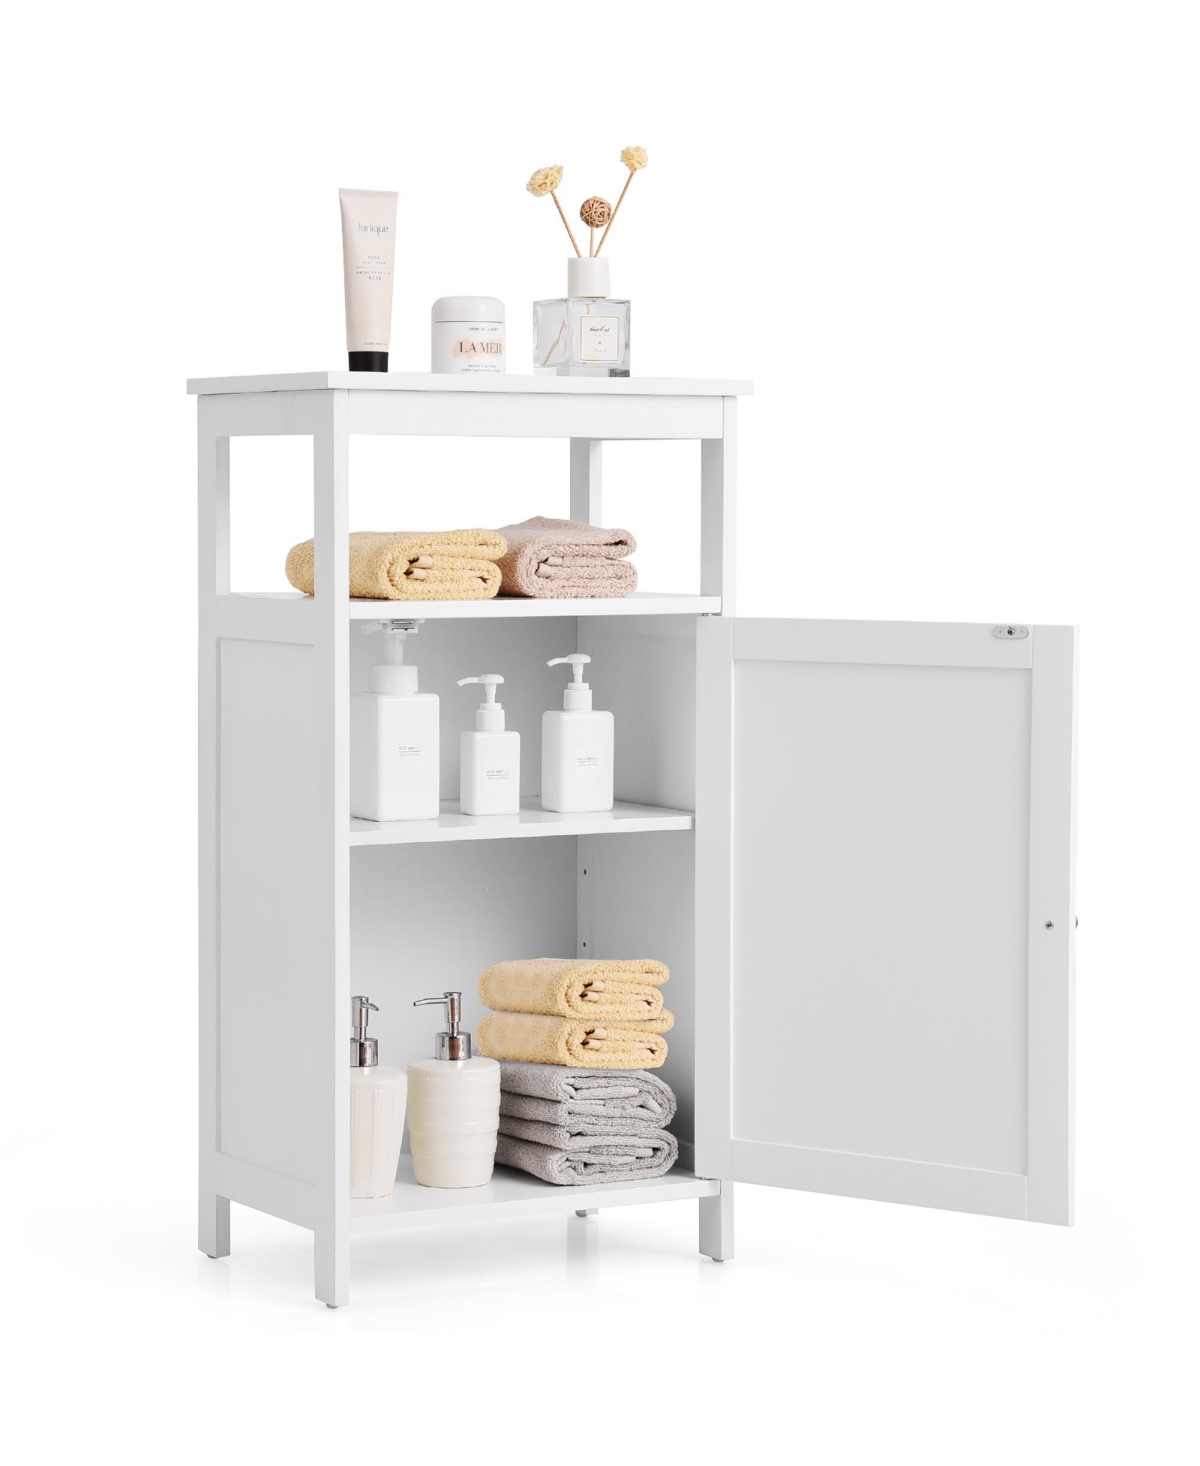 Bathroom Wooden Floor Cabinet Multifunction Storage Rack Organizer Stand Bedroom - White